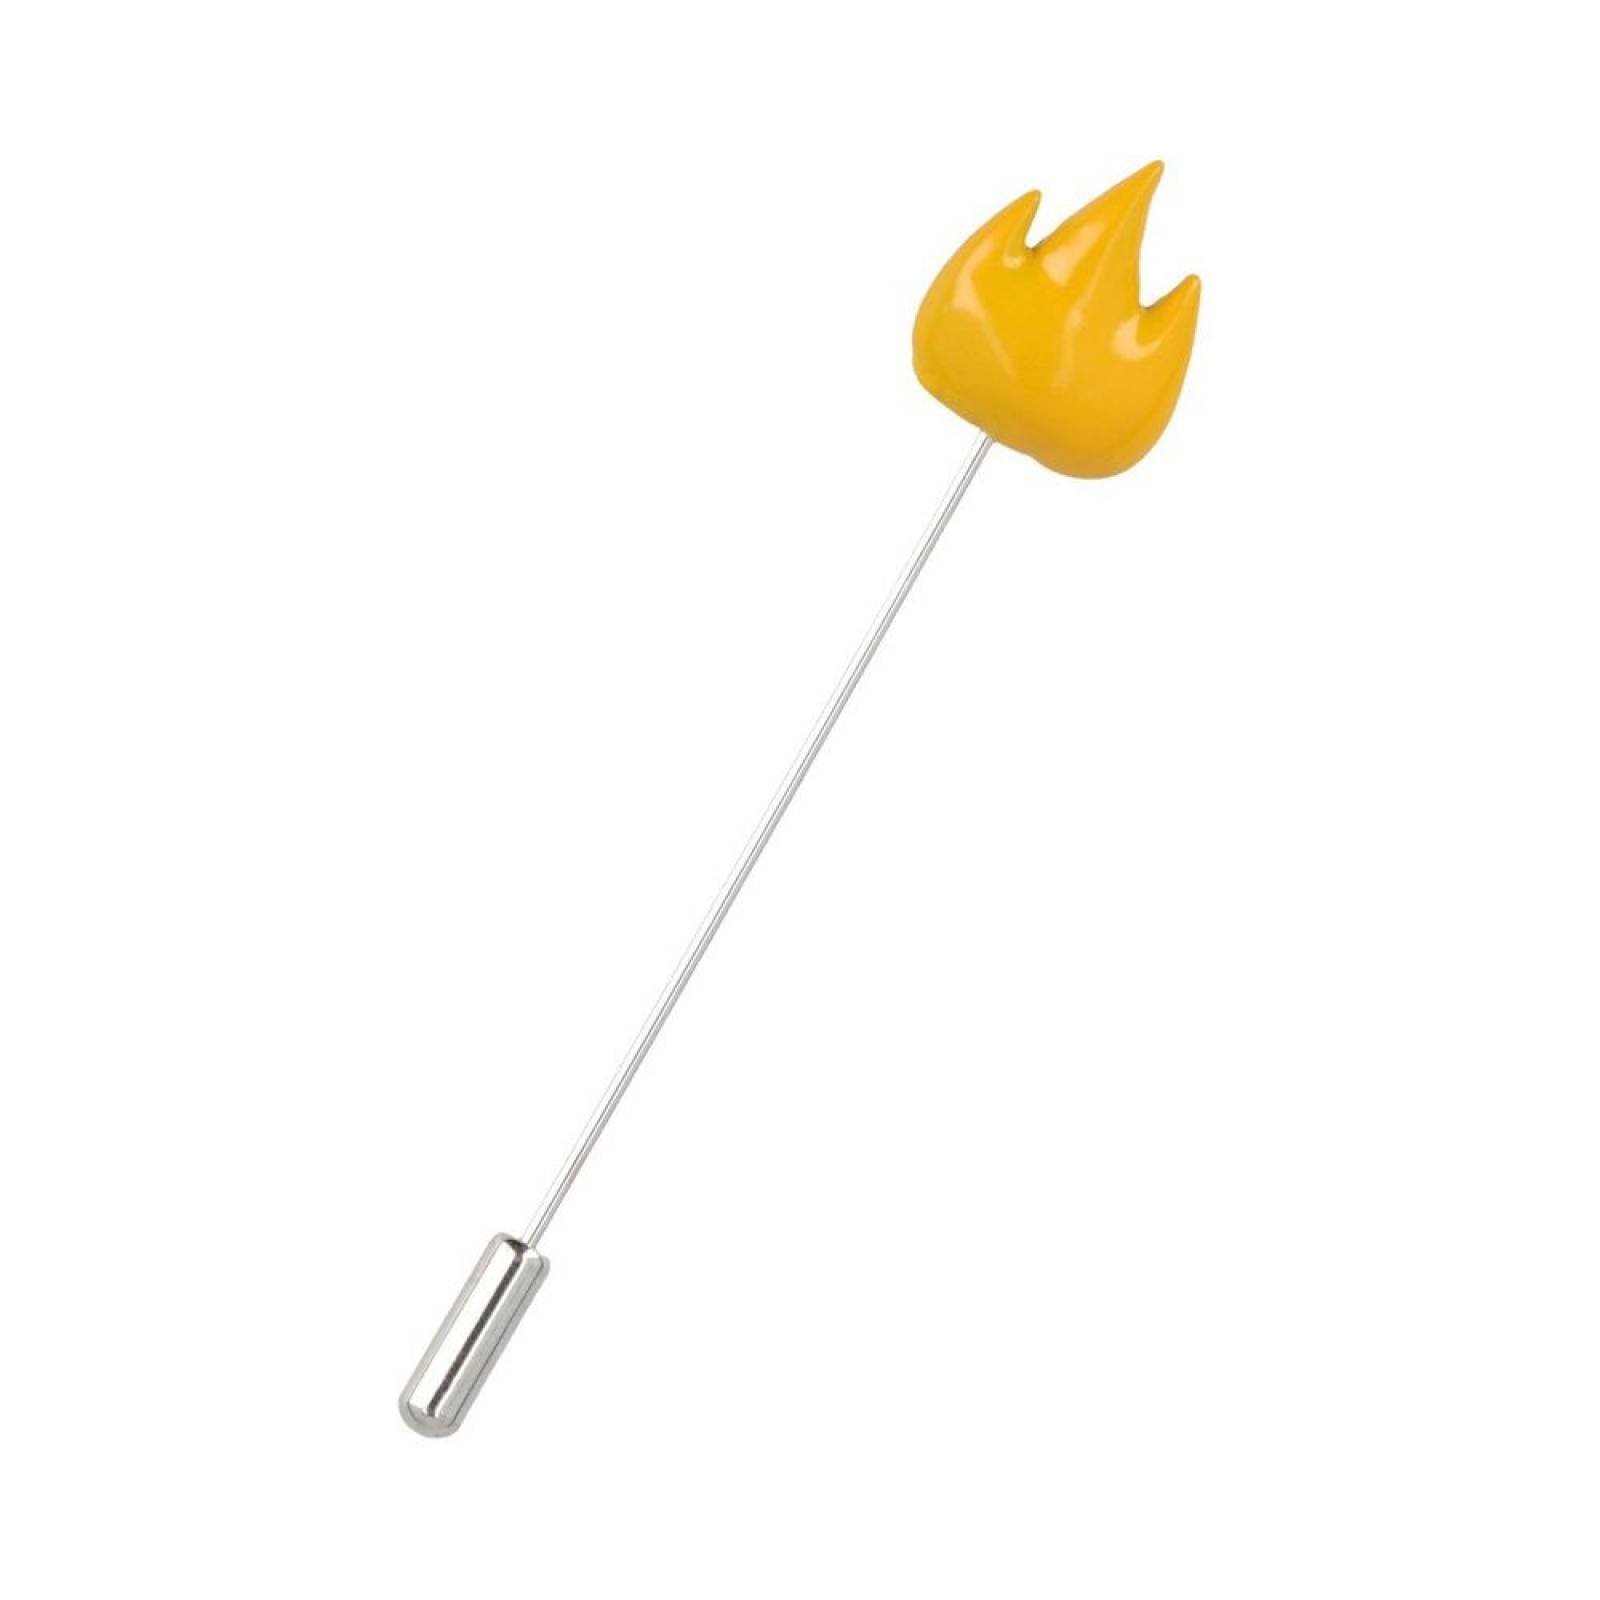 Pin Royal Flush metálico amarillo flama acero 